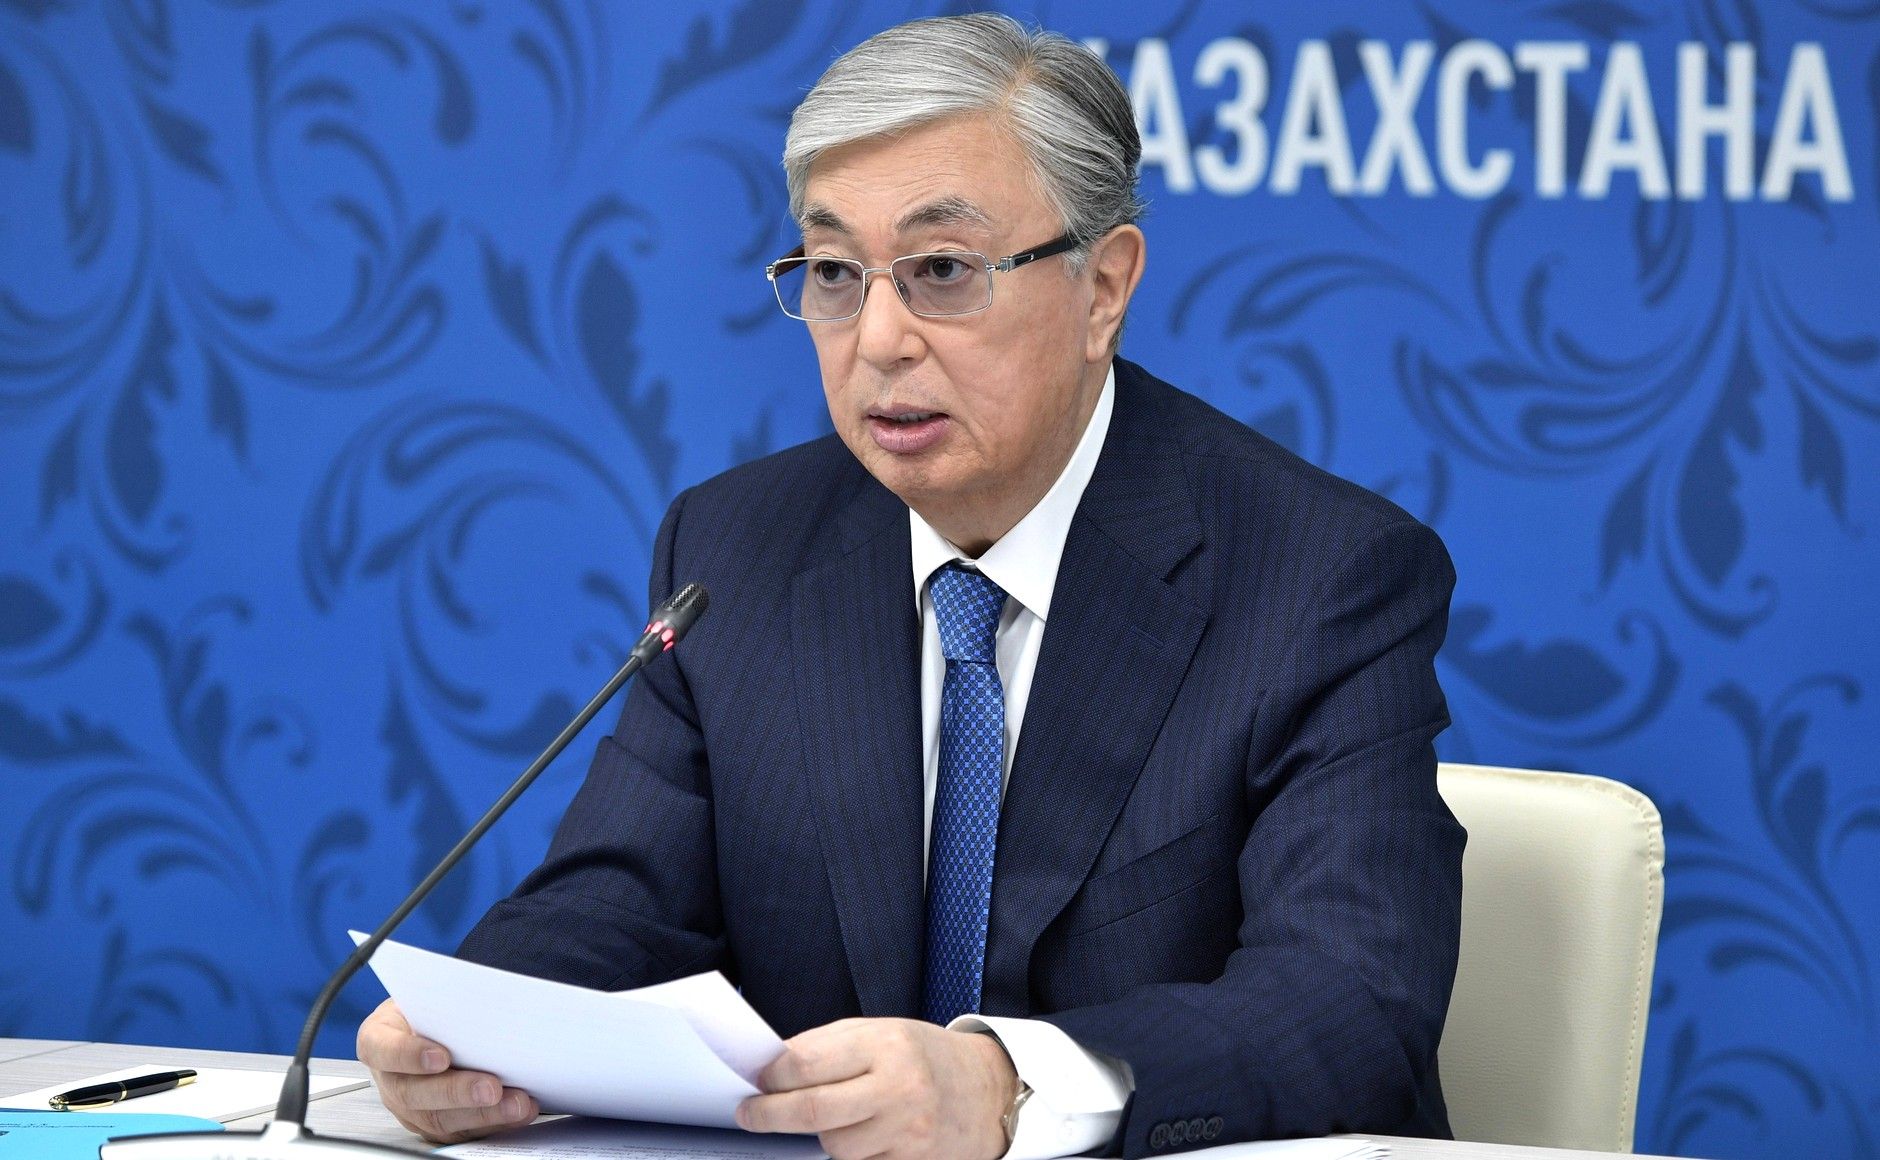 President of the Republic of Kazakhstan Kassym-Jomart Tokayev. Photo: The Kremlin